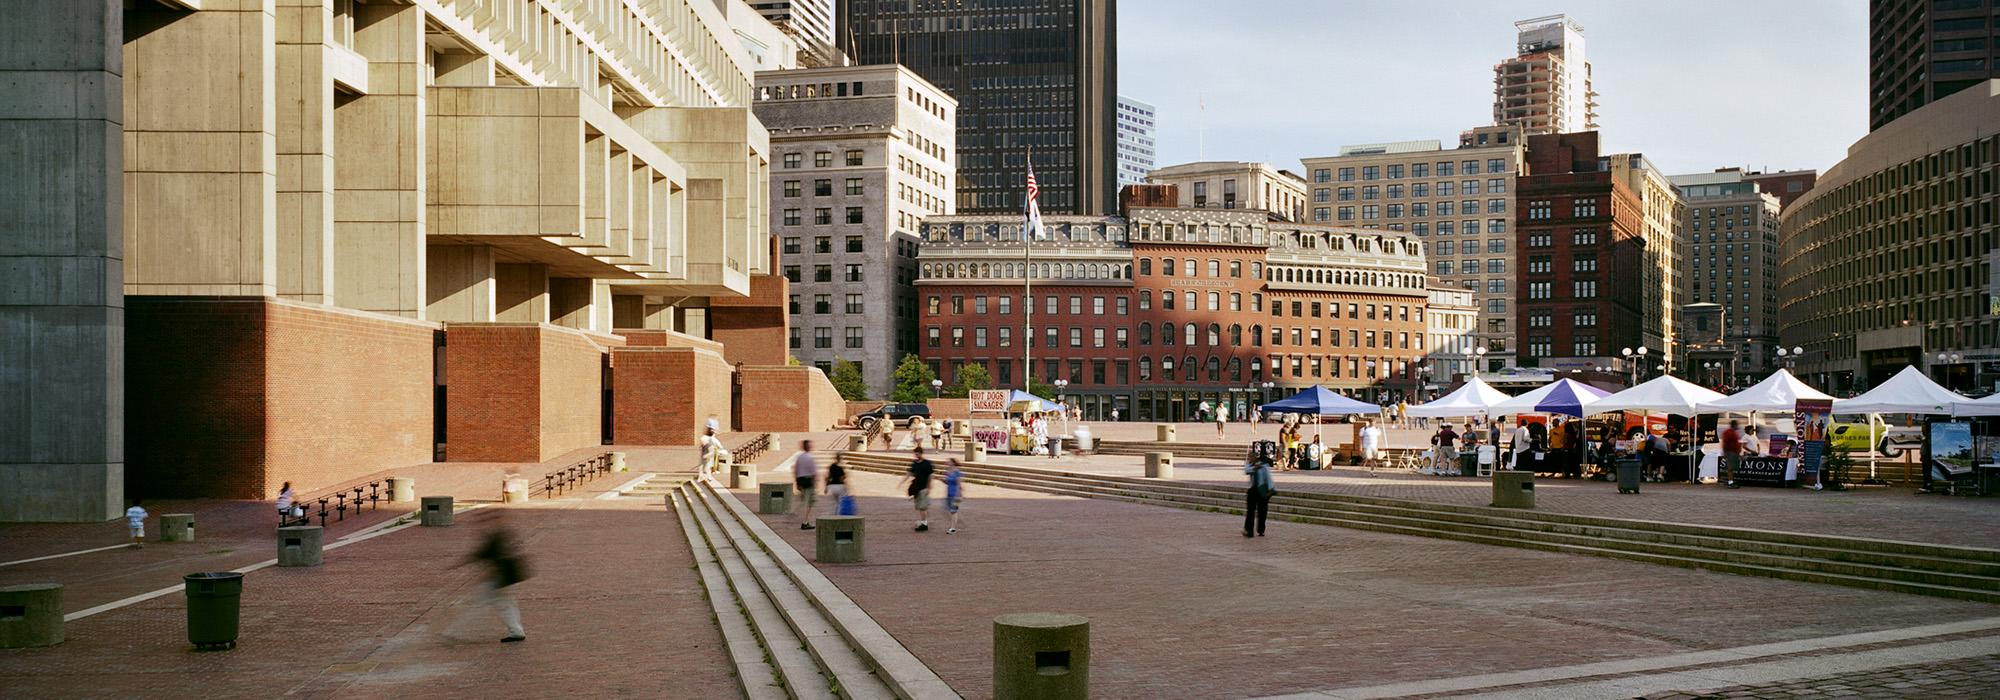 Boston City Hall Plaza, Boston, MA